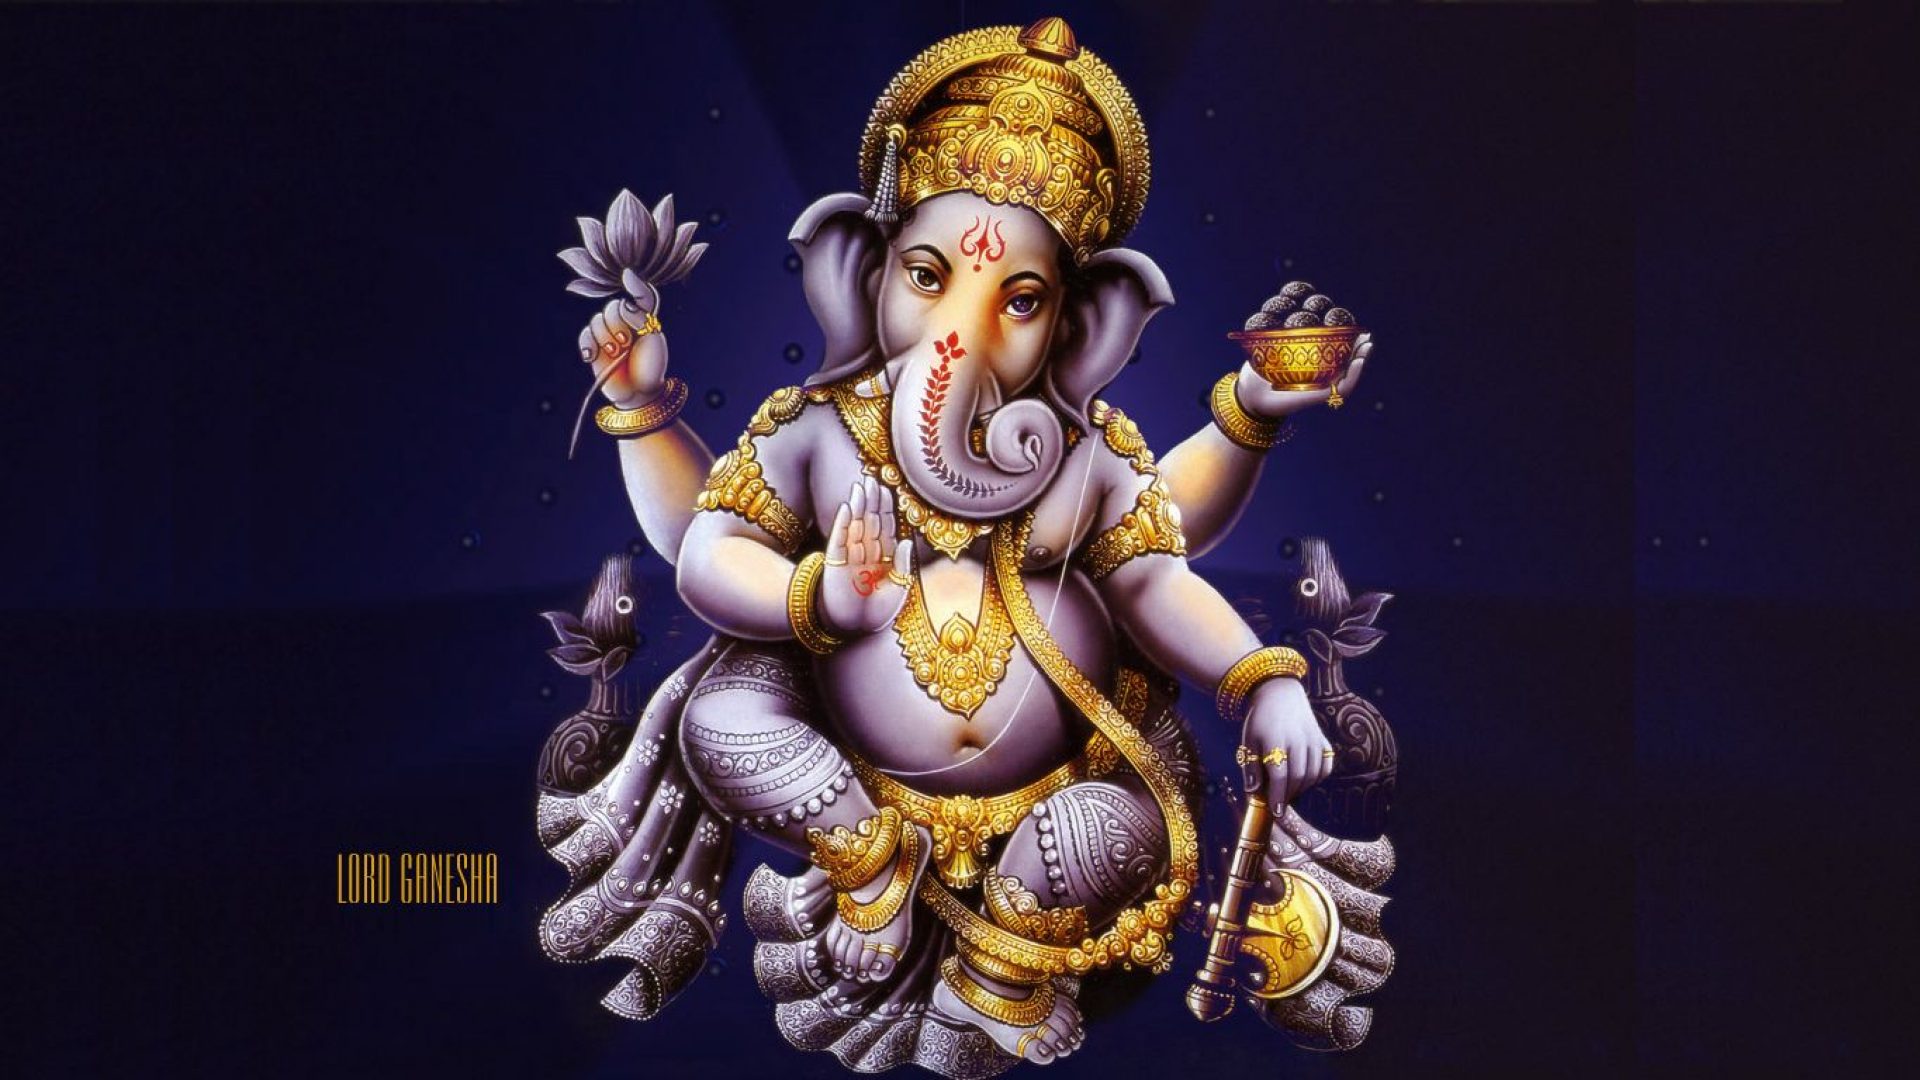 Lord Ganesha | Hindu Gods and Goddesses